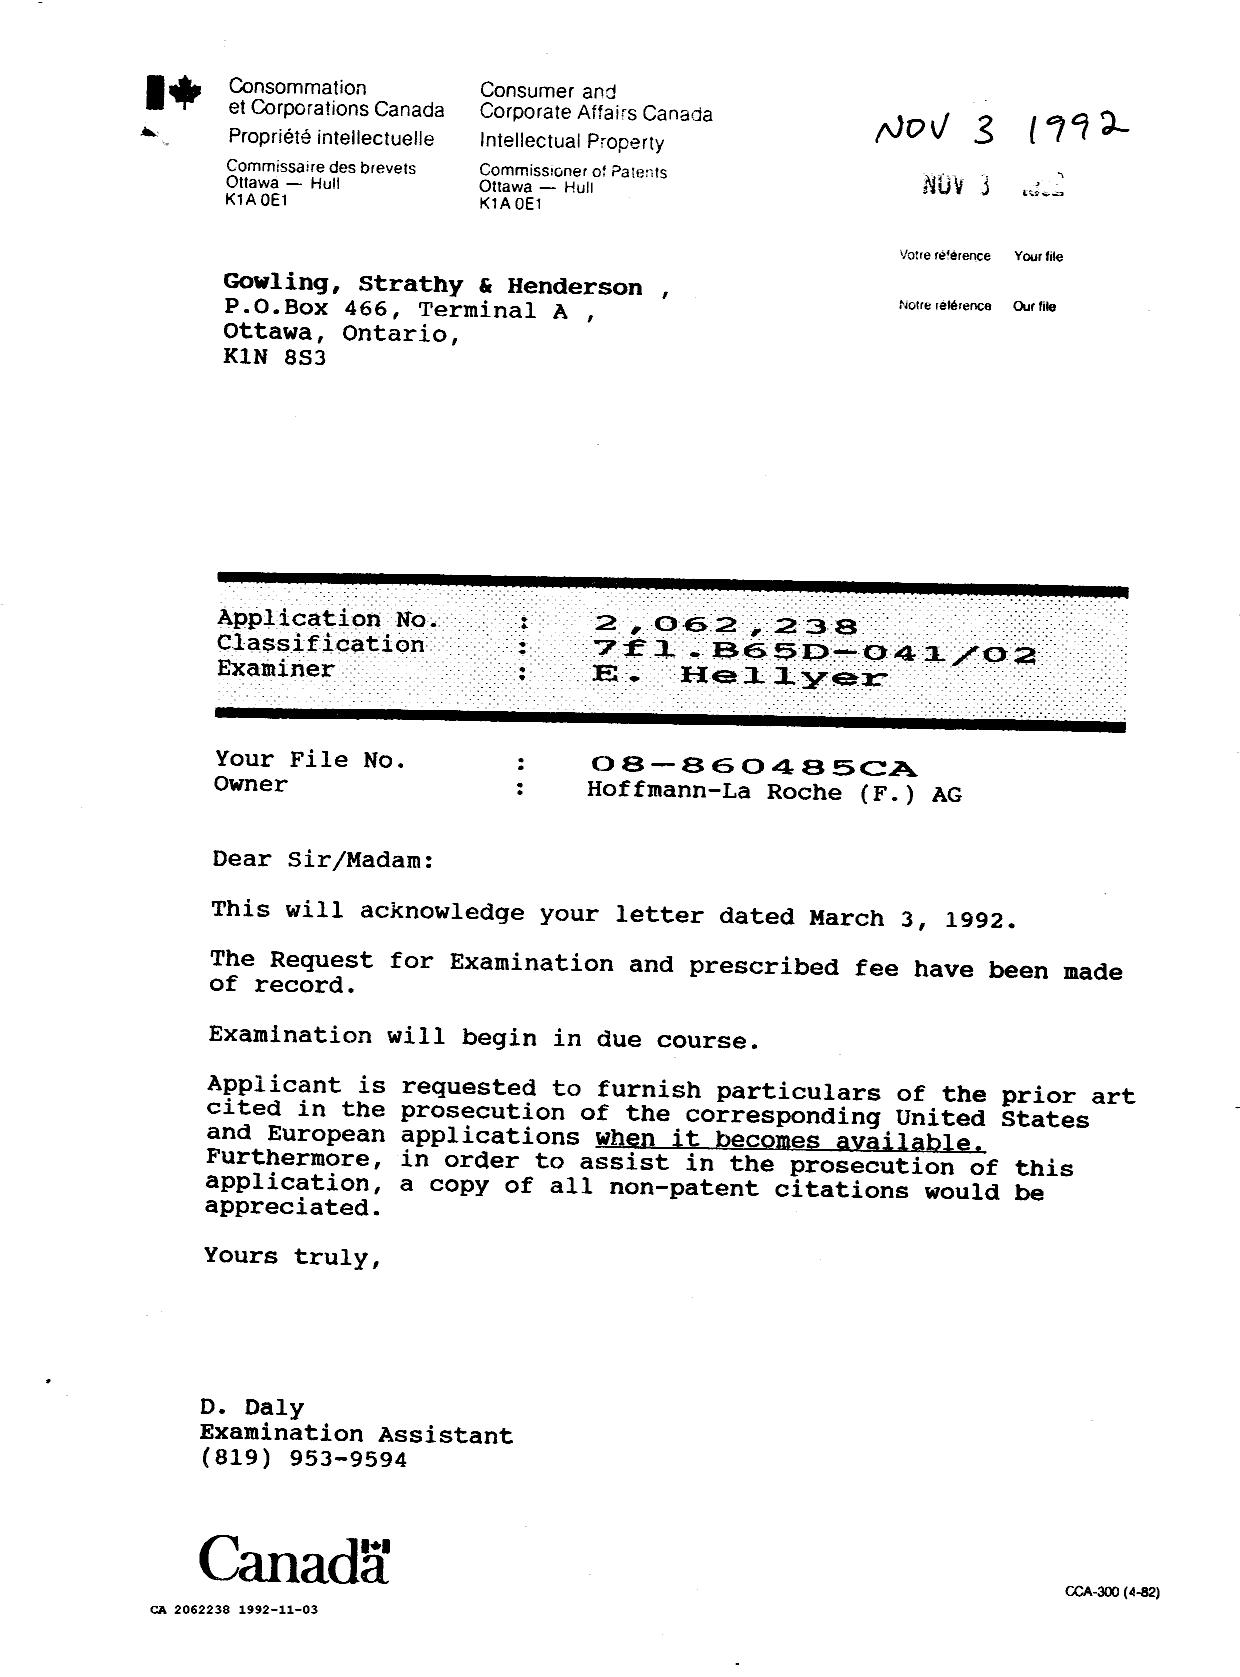 Canadian Patent Document 2062238. Correspondence 19911203. Image 1 of 1